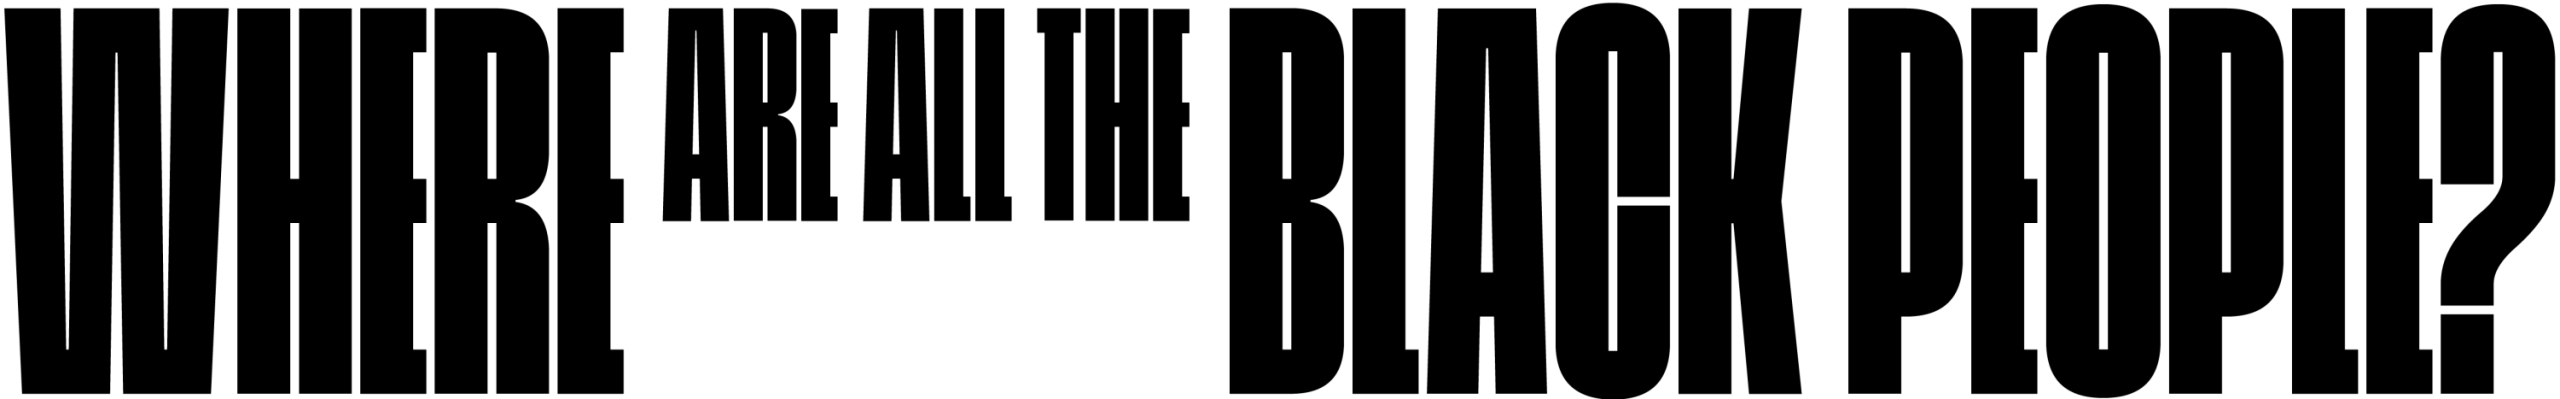 waatbp-title-logo